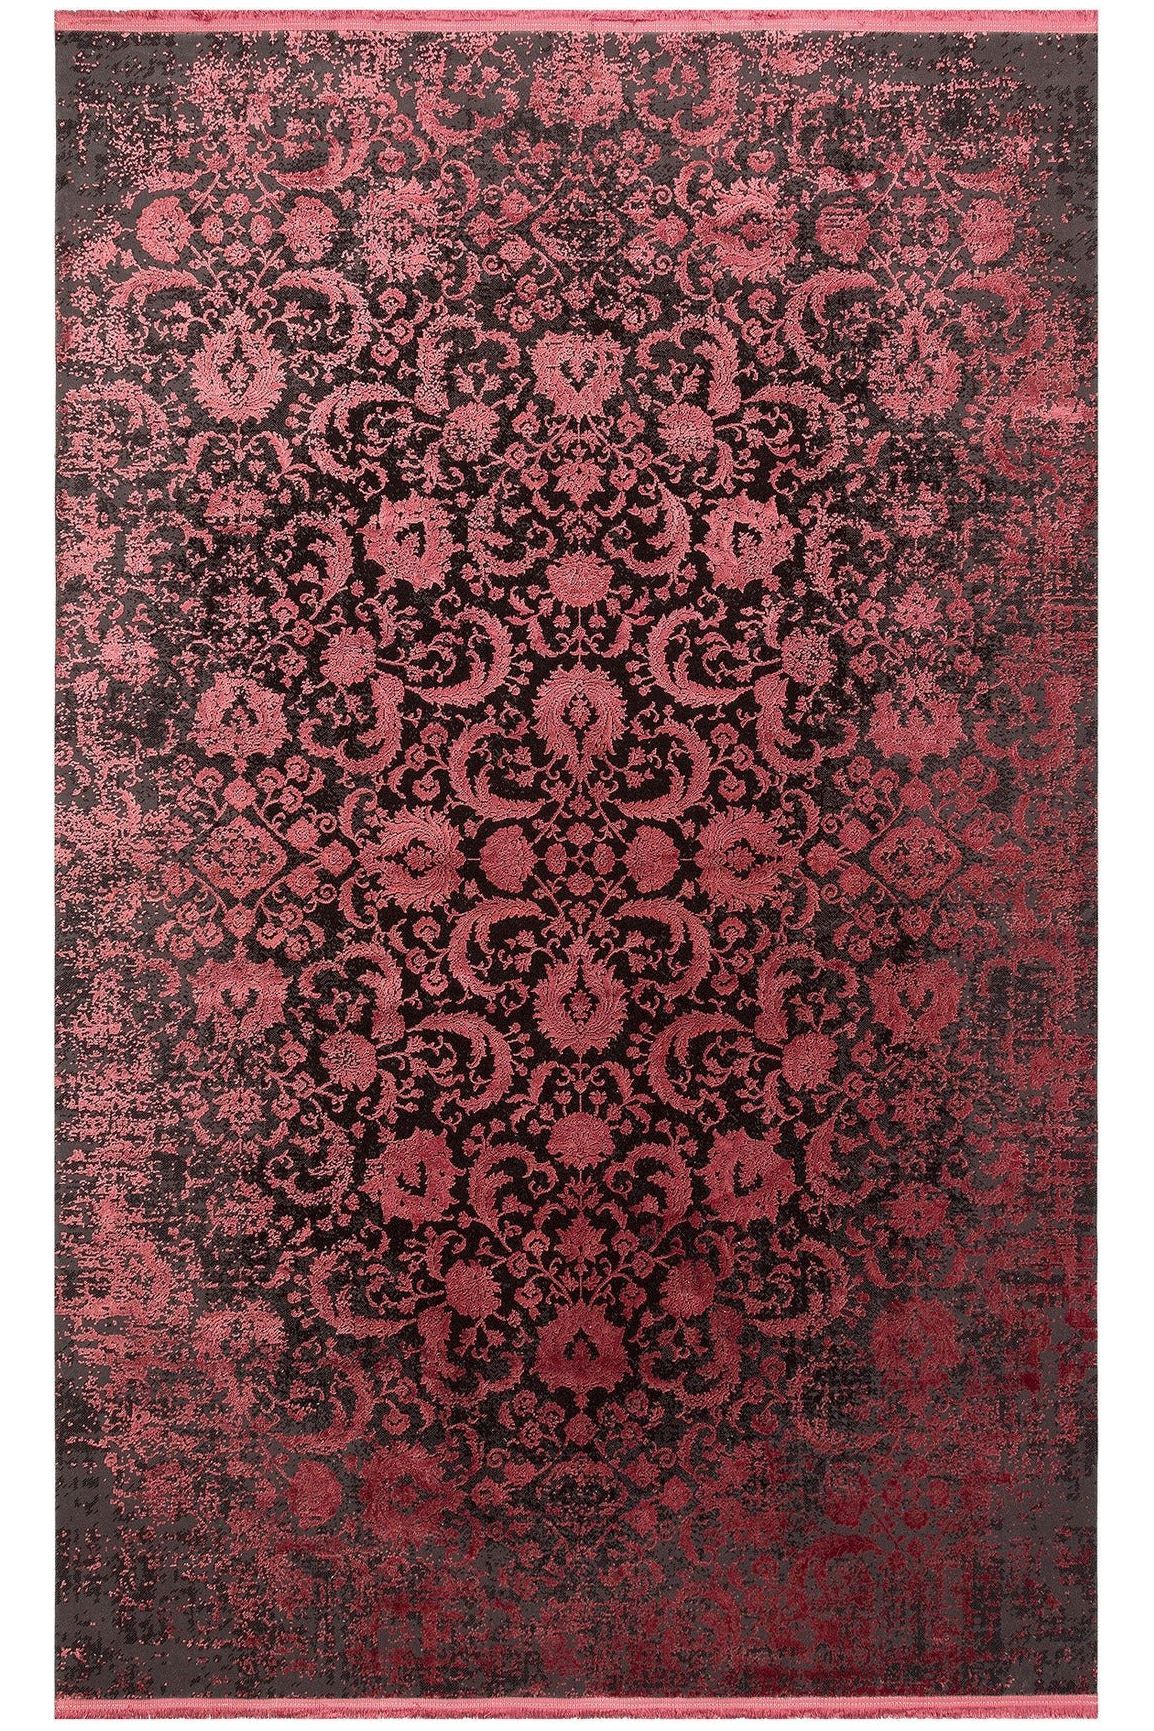 #Turkish_Carpets_Rugs# #Modern_Carpets# #Abrash_Carpets#Db 02 Antrasit Burgundy Nw